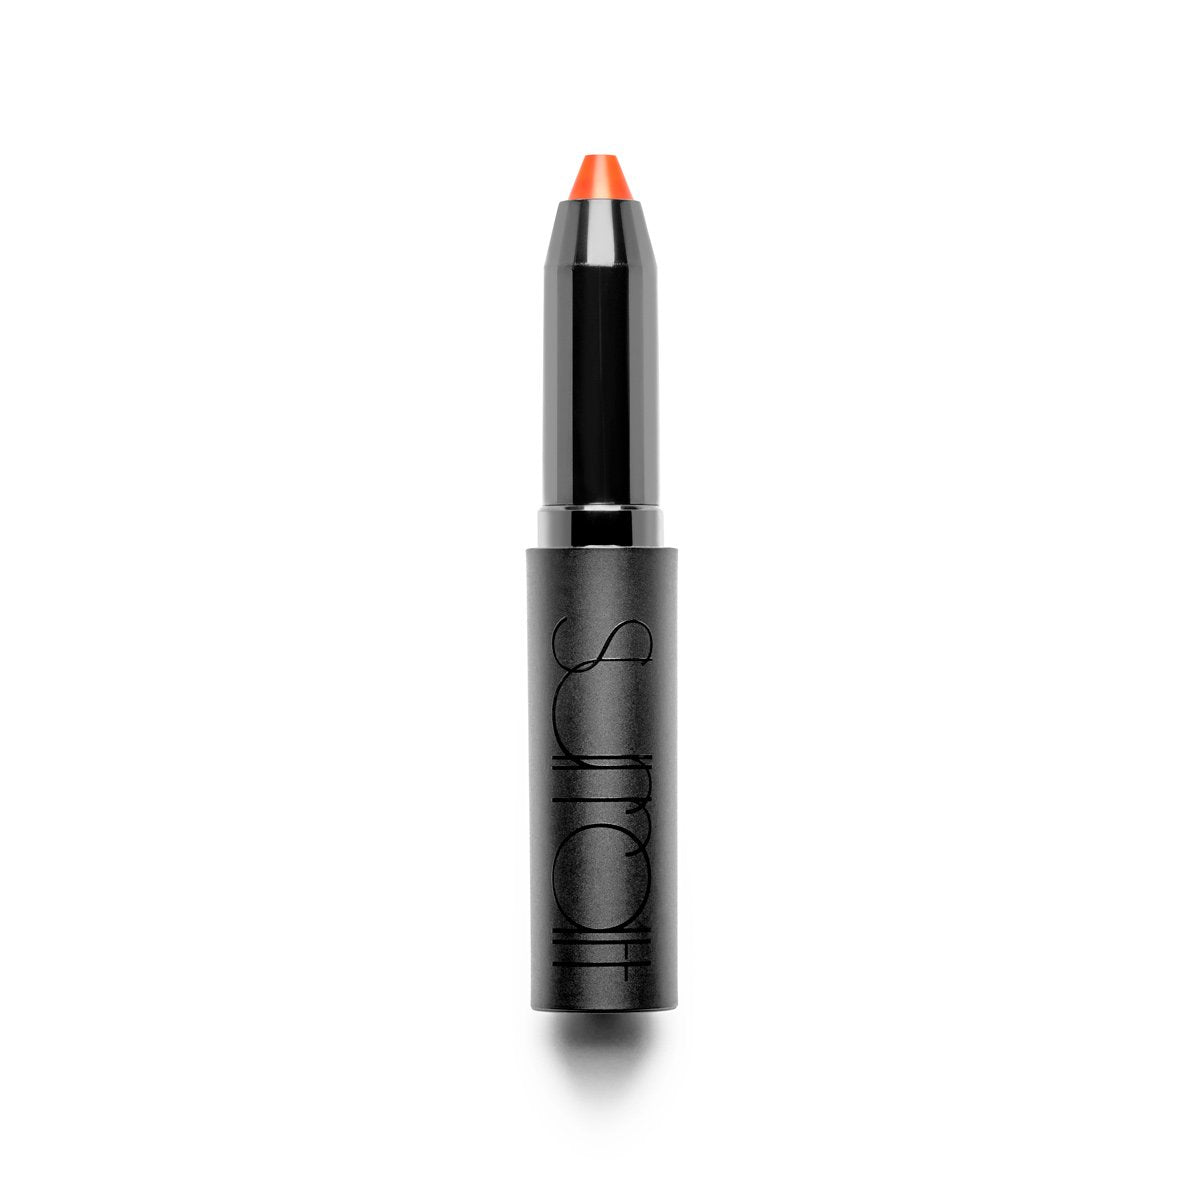 CLEMENTINE - True Orange - long-wearing matte finish lipstick in classic orange shade